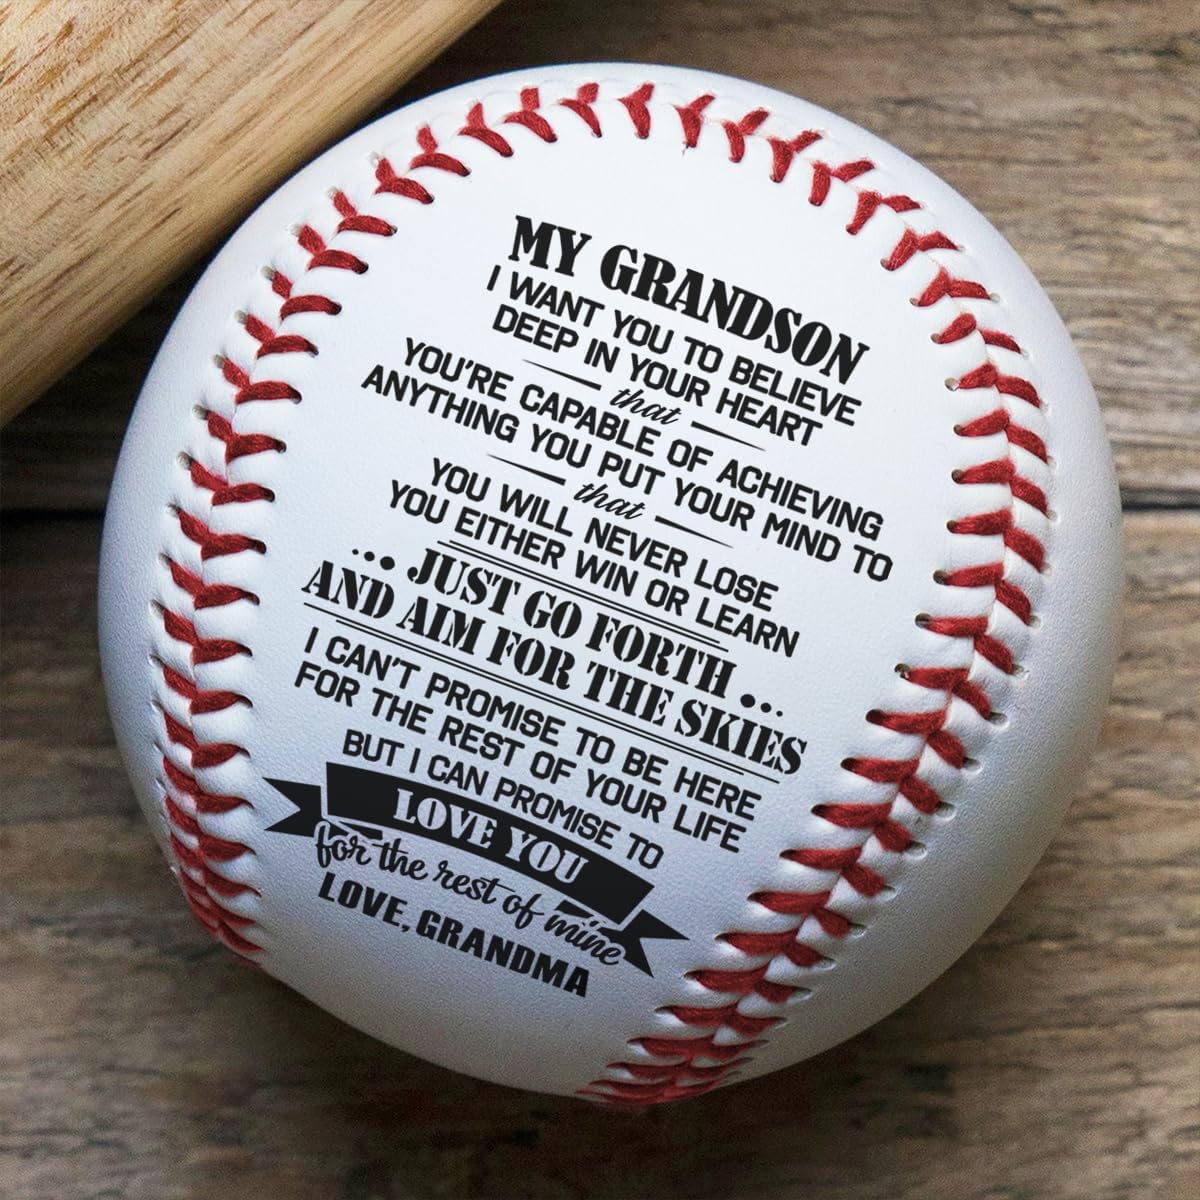 Grandma To grandson - You Will Never Lose | Baseball